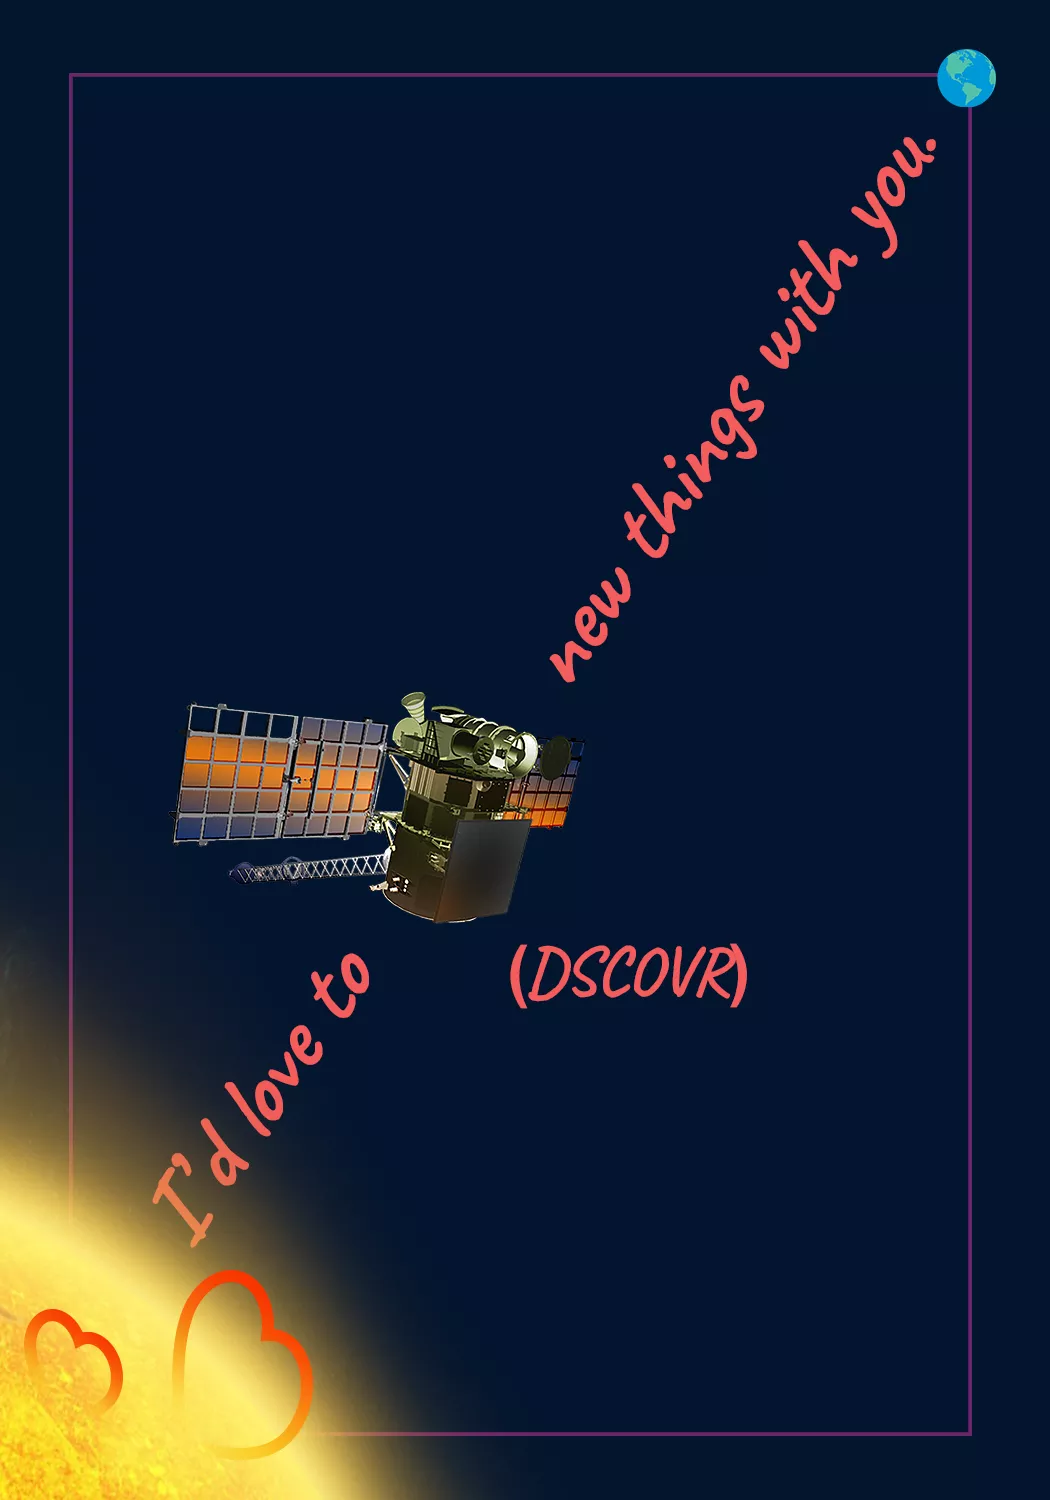 Image of the DSCOVR Satellite